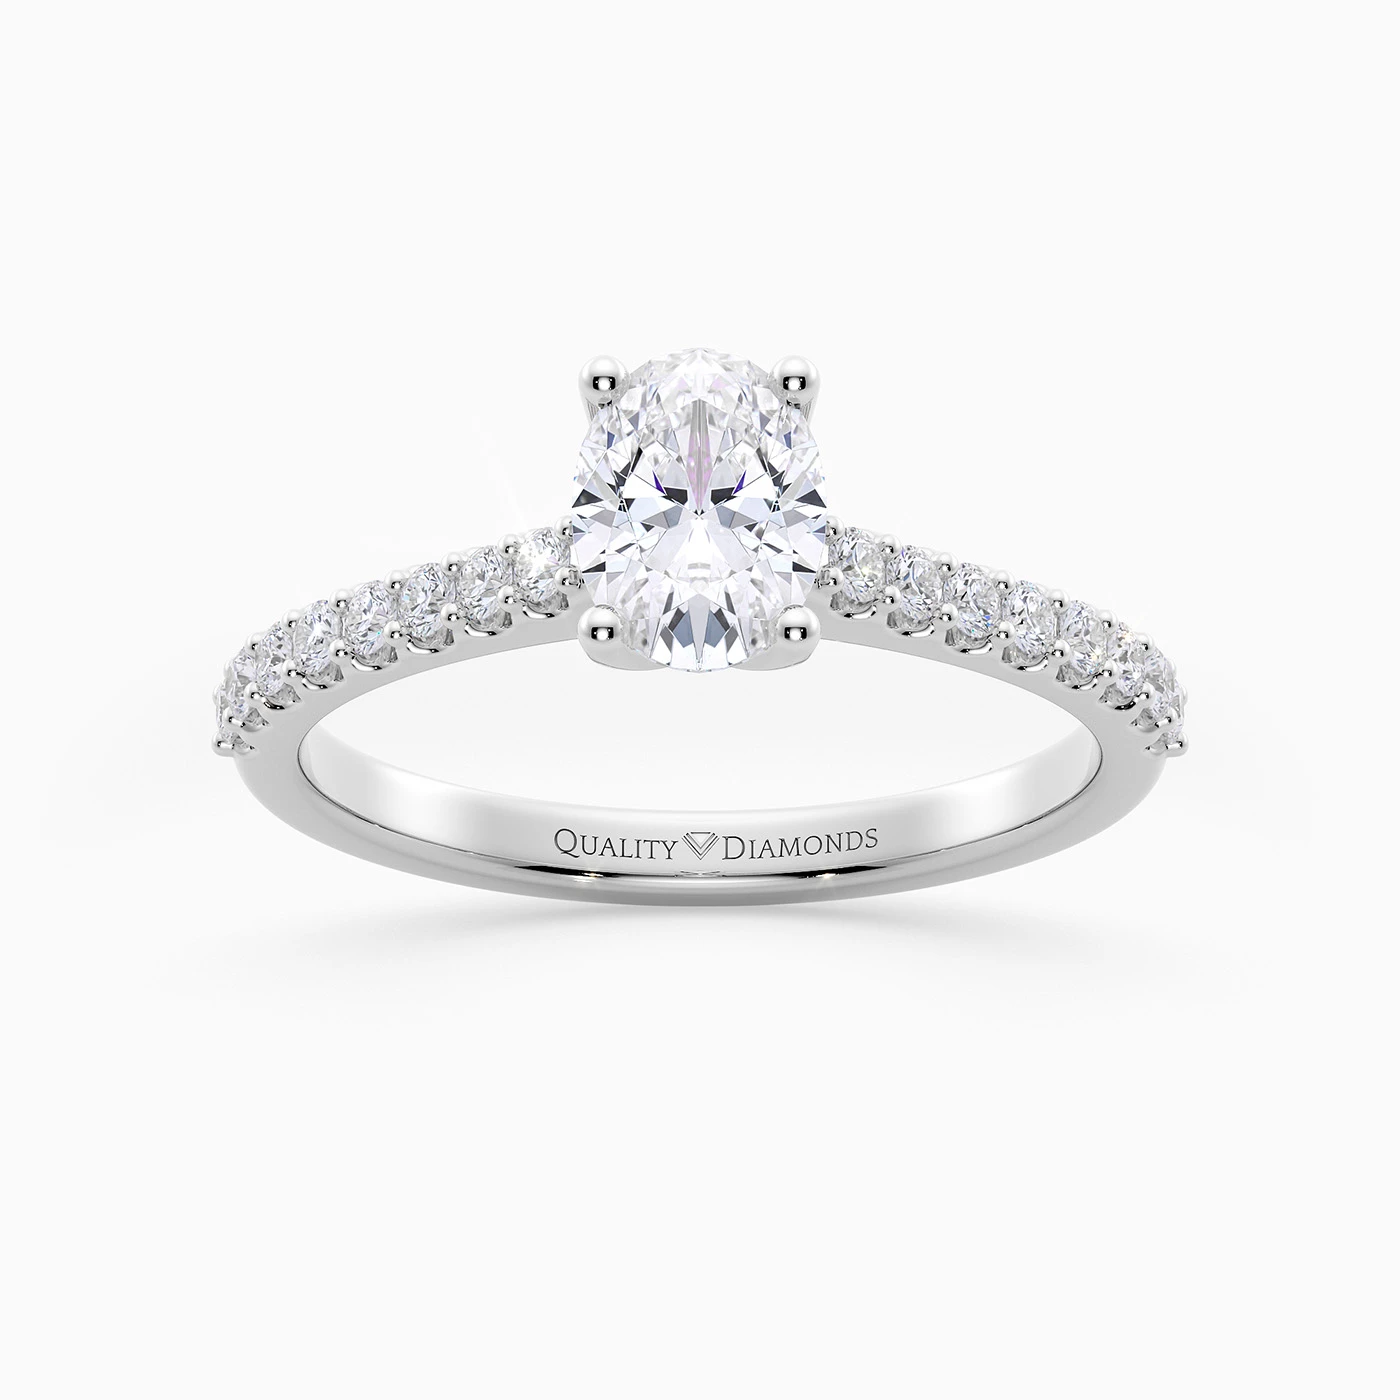 Oval Diamond Set Amorette Diamond Ring in Platinum